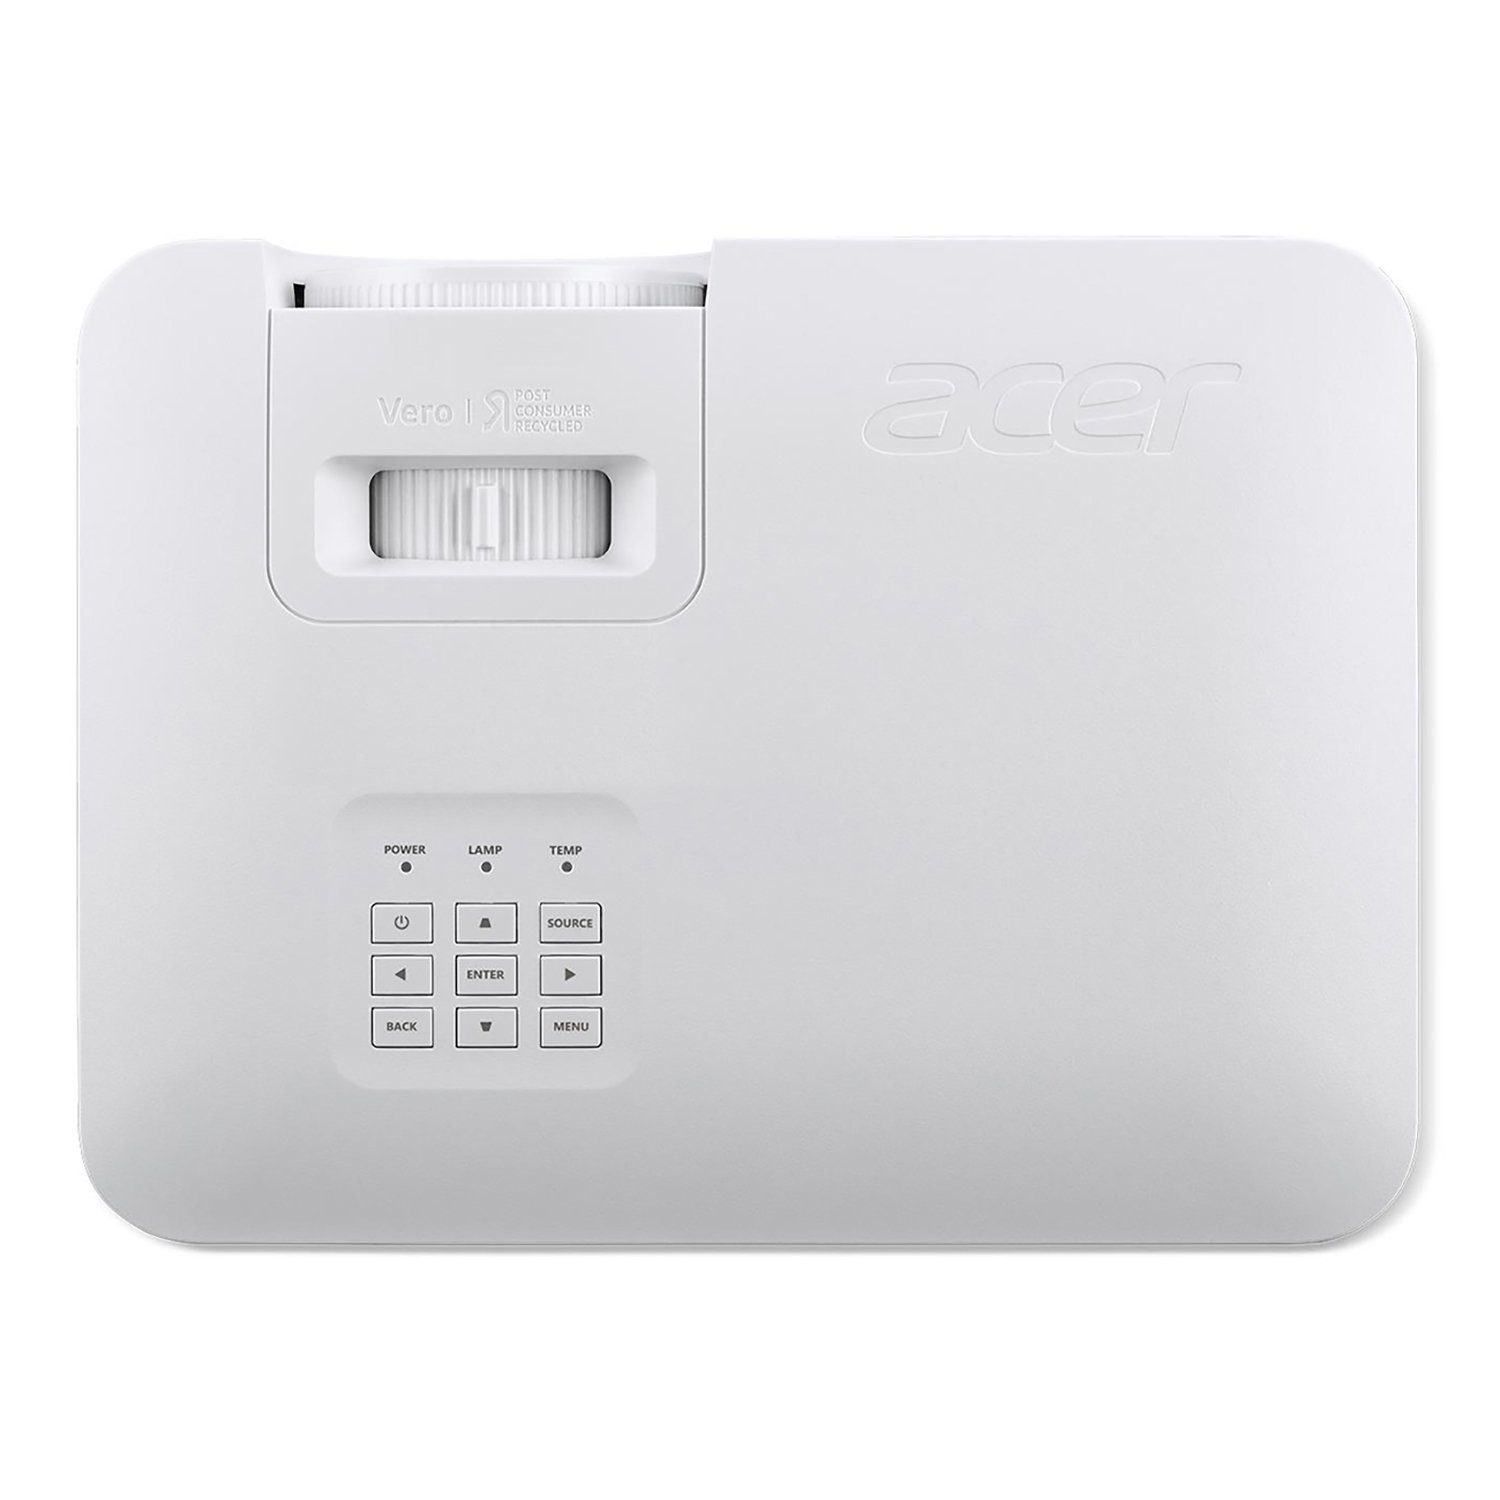 Acer 1280 50000:1, Projektor (5000 x Vero lm, 800 px) Portabler XL2330W